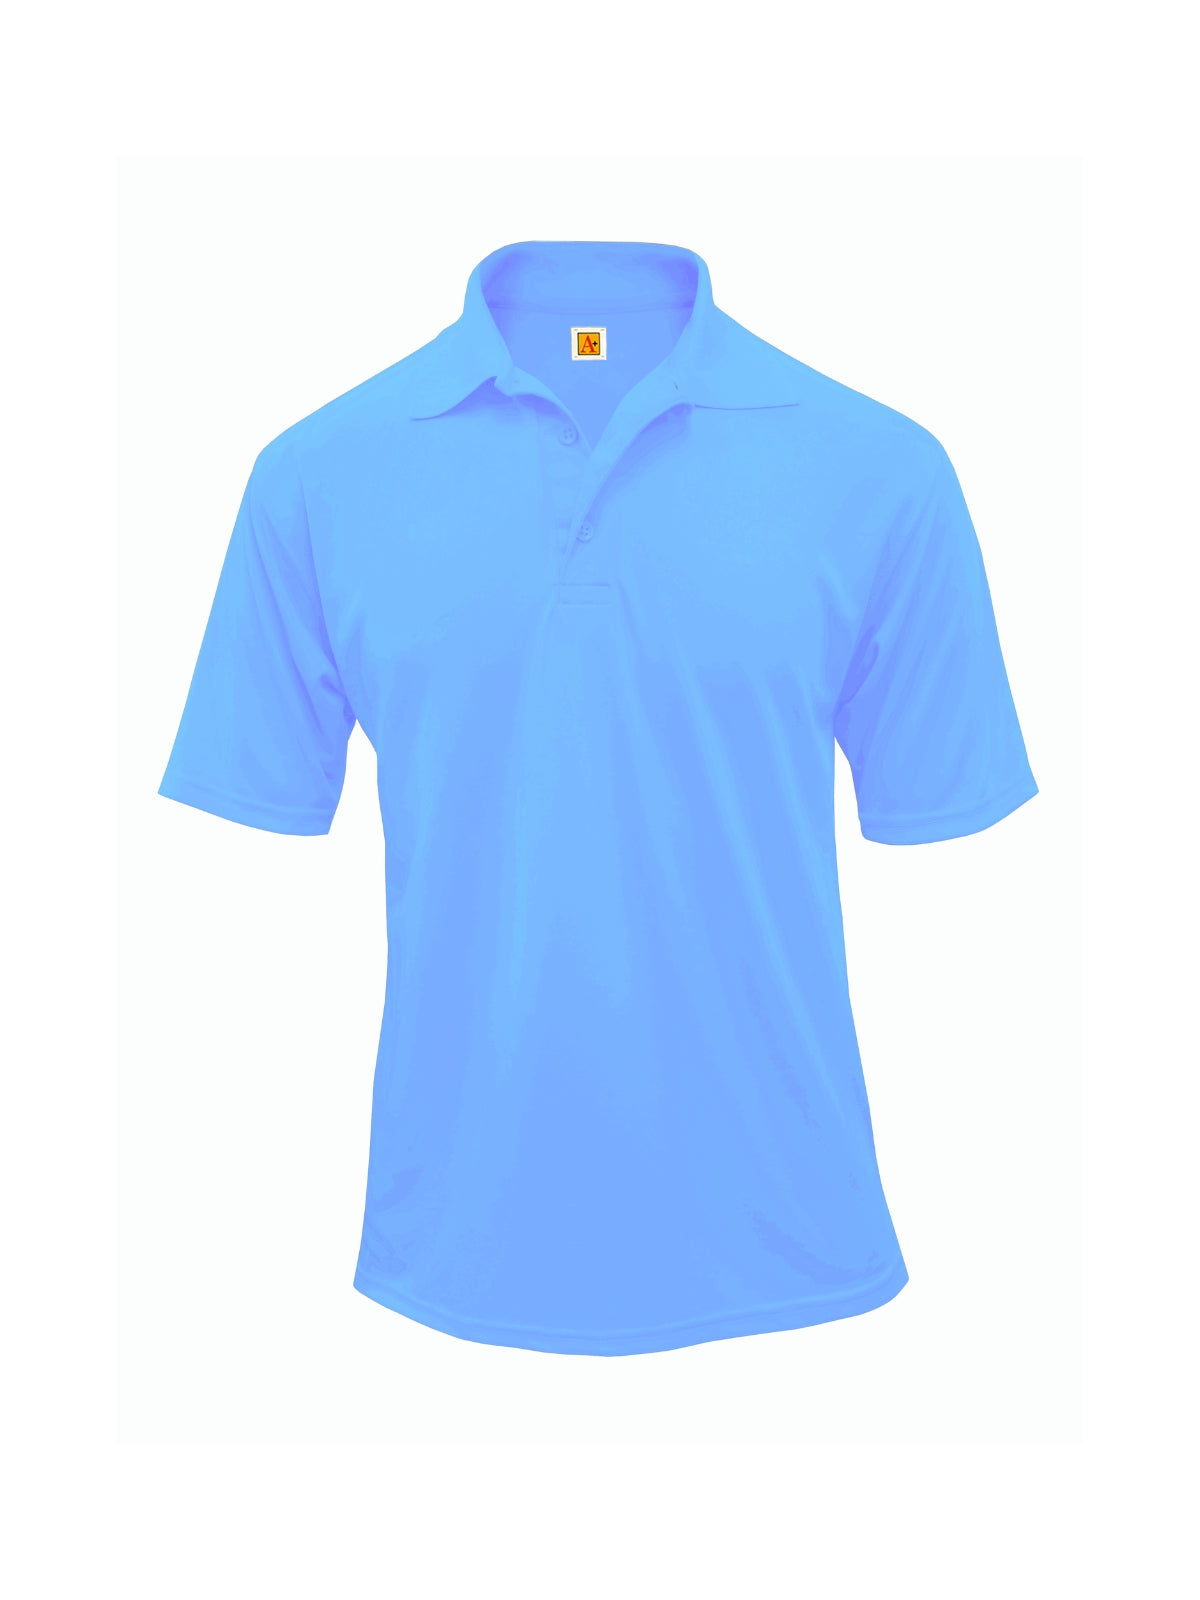 Unisex Short Sleeve Dri-Fit Polo - 8953 - Light Blue